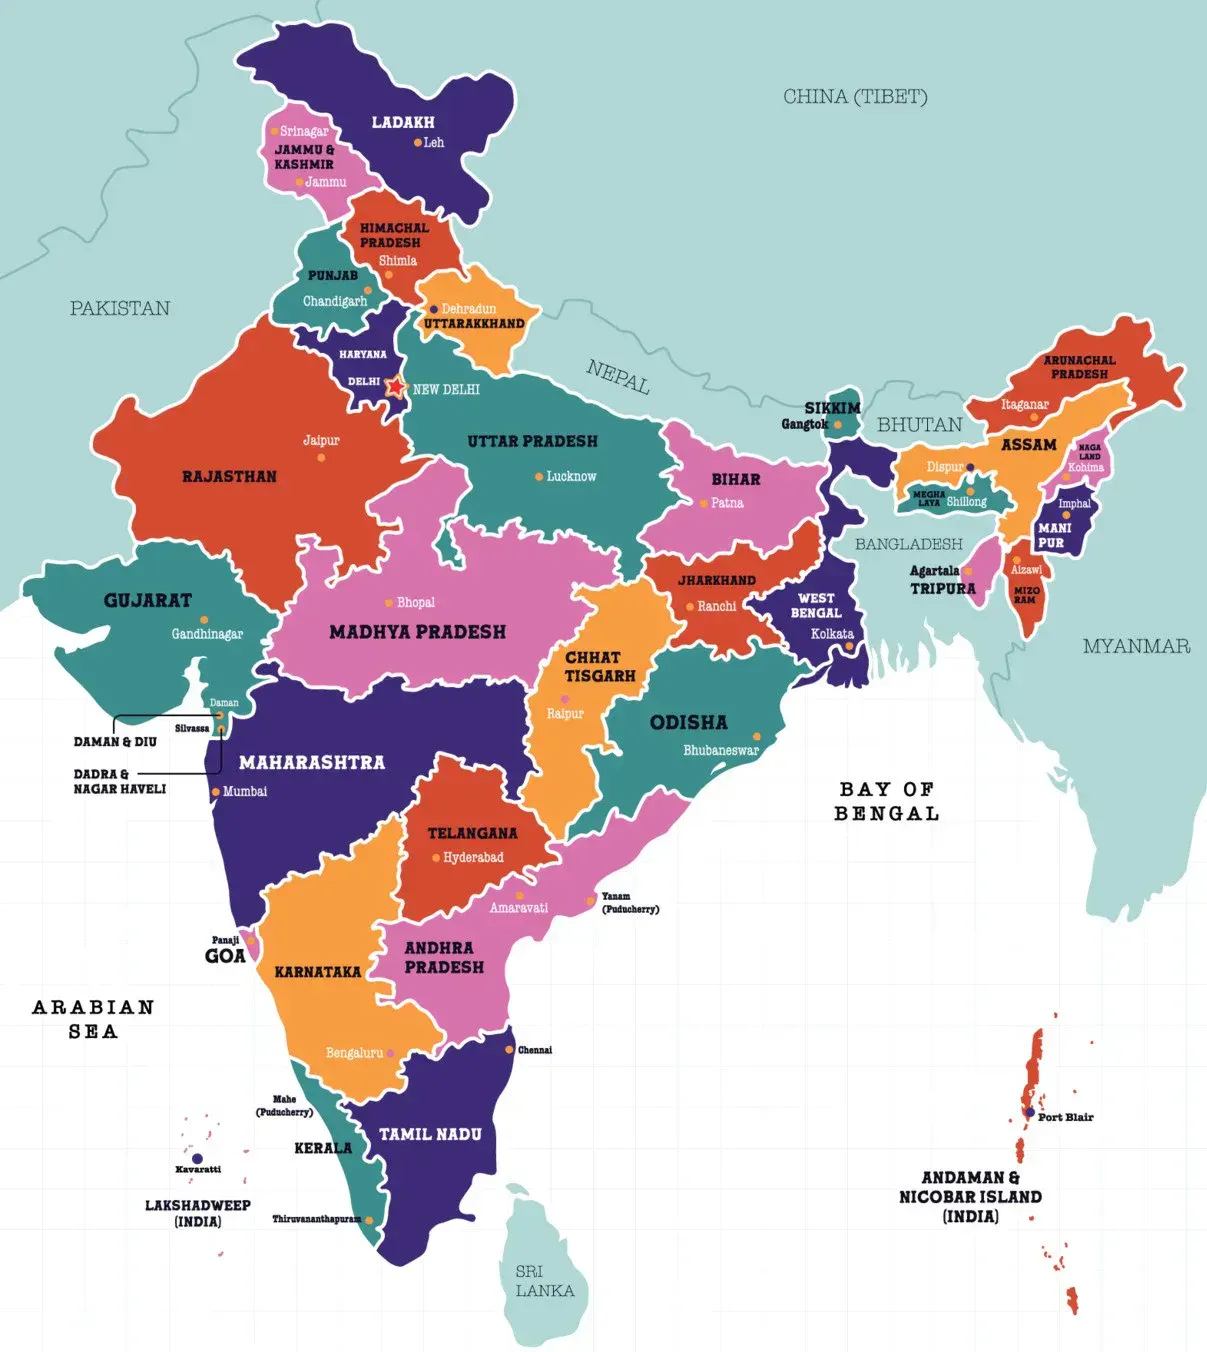 India Travel States & Union Territories Map (Image Source - https://www.vecteezy.com/